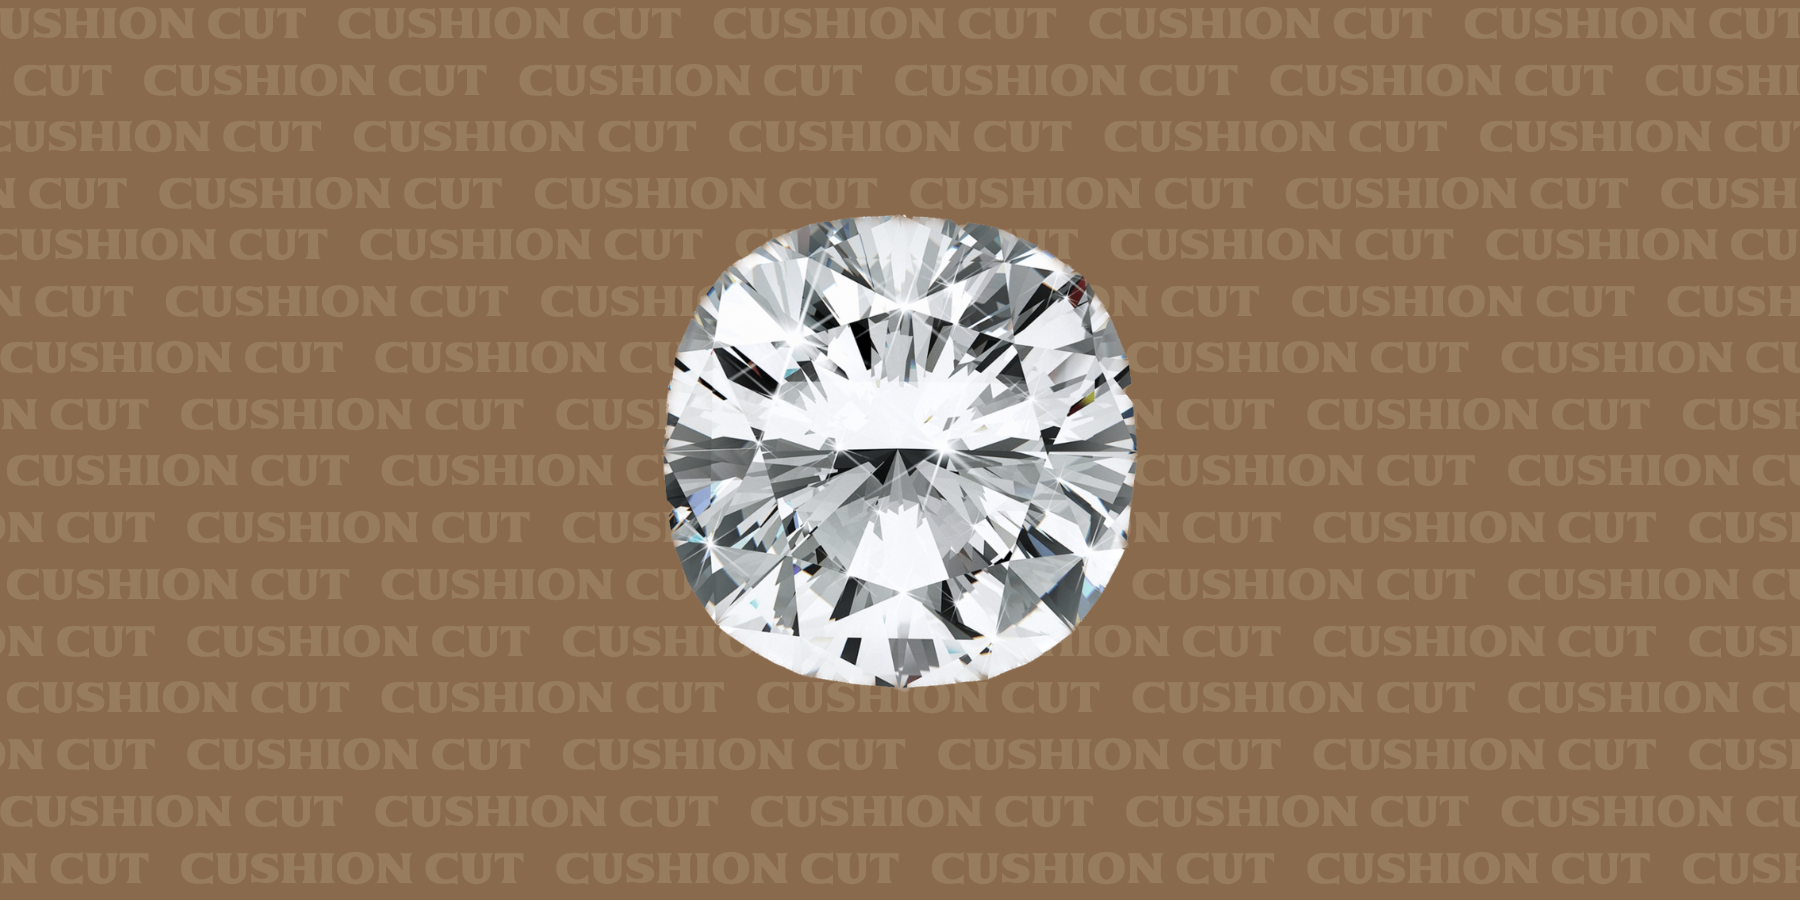 Cushion Cut Diamond: Definition, Characteristics, Collections